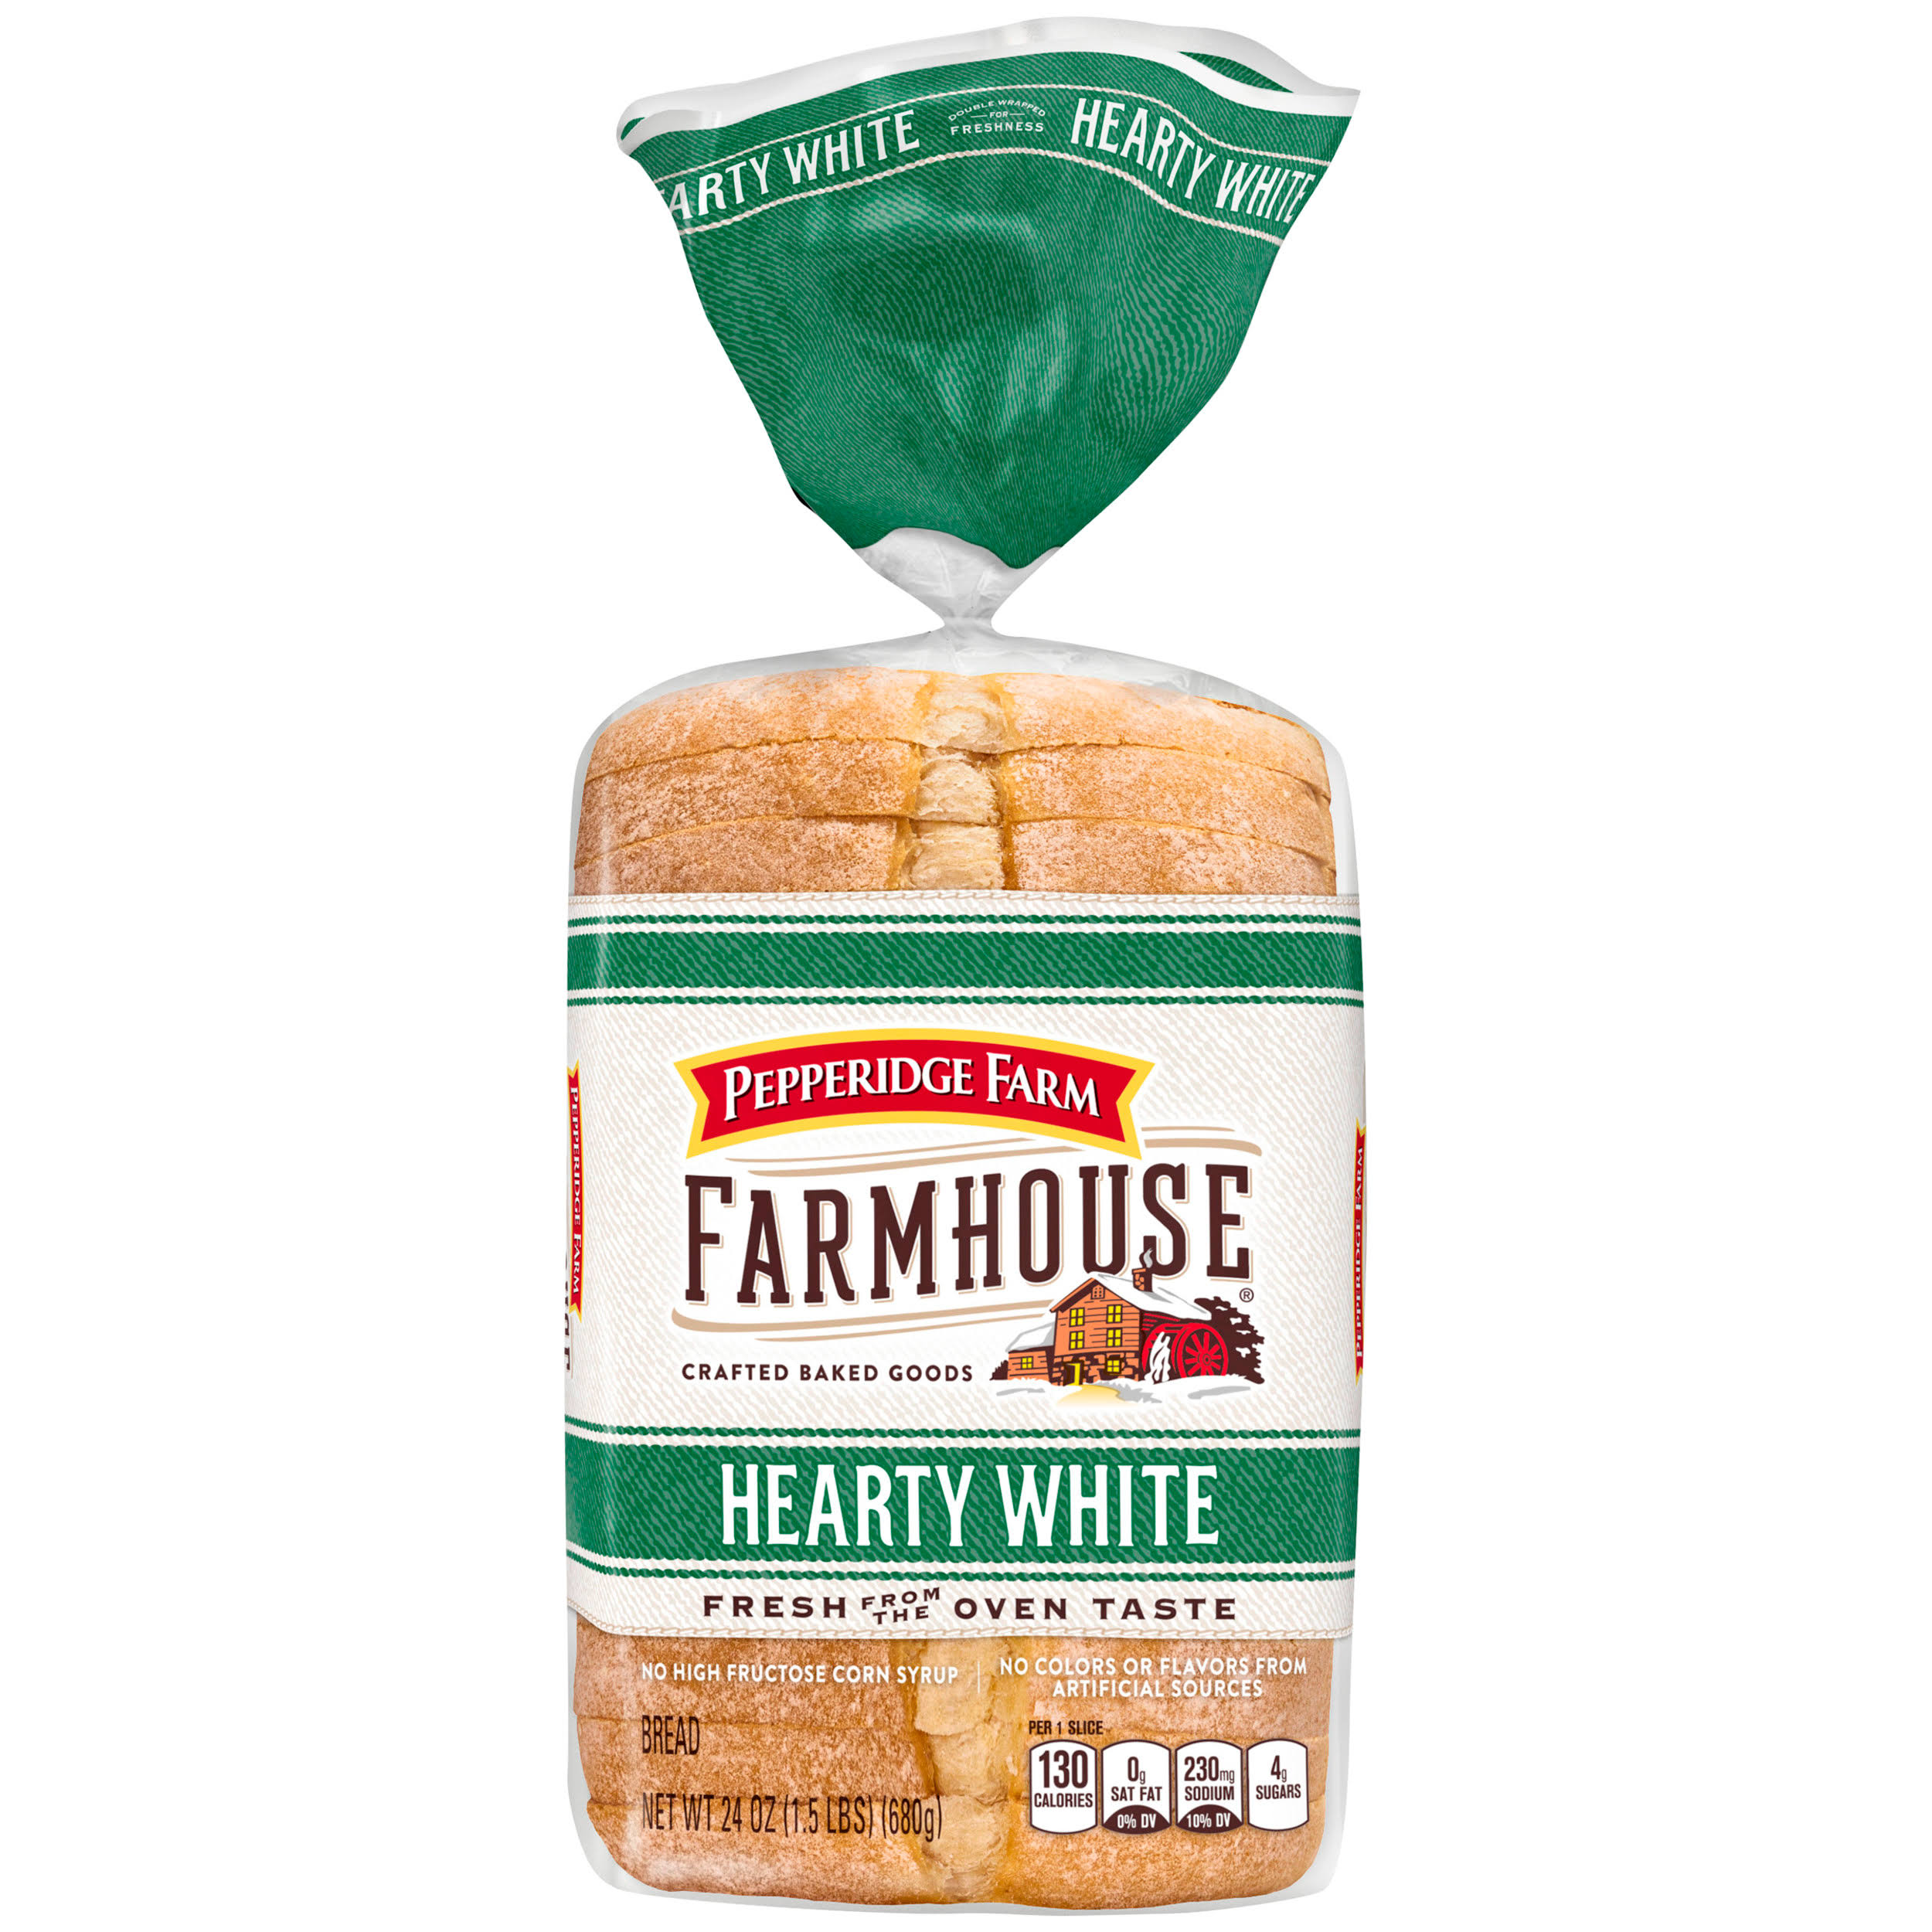 Pepperidge Farm Farmhouse Hearty White Bread - 680g